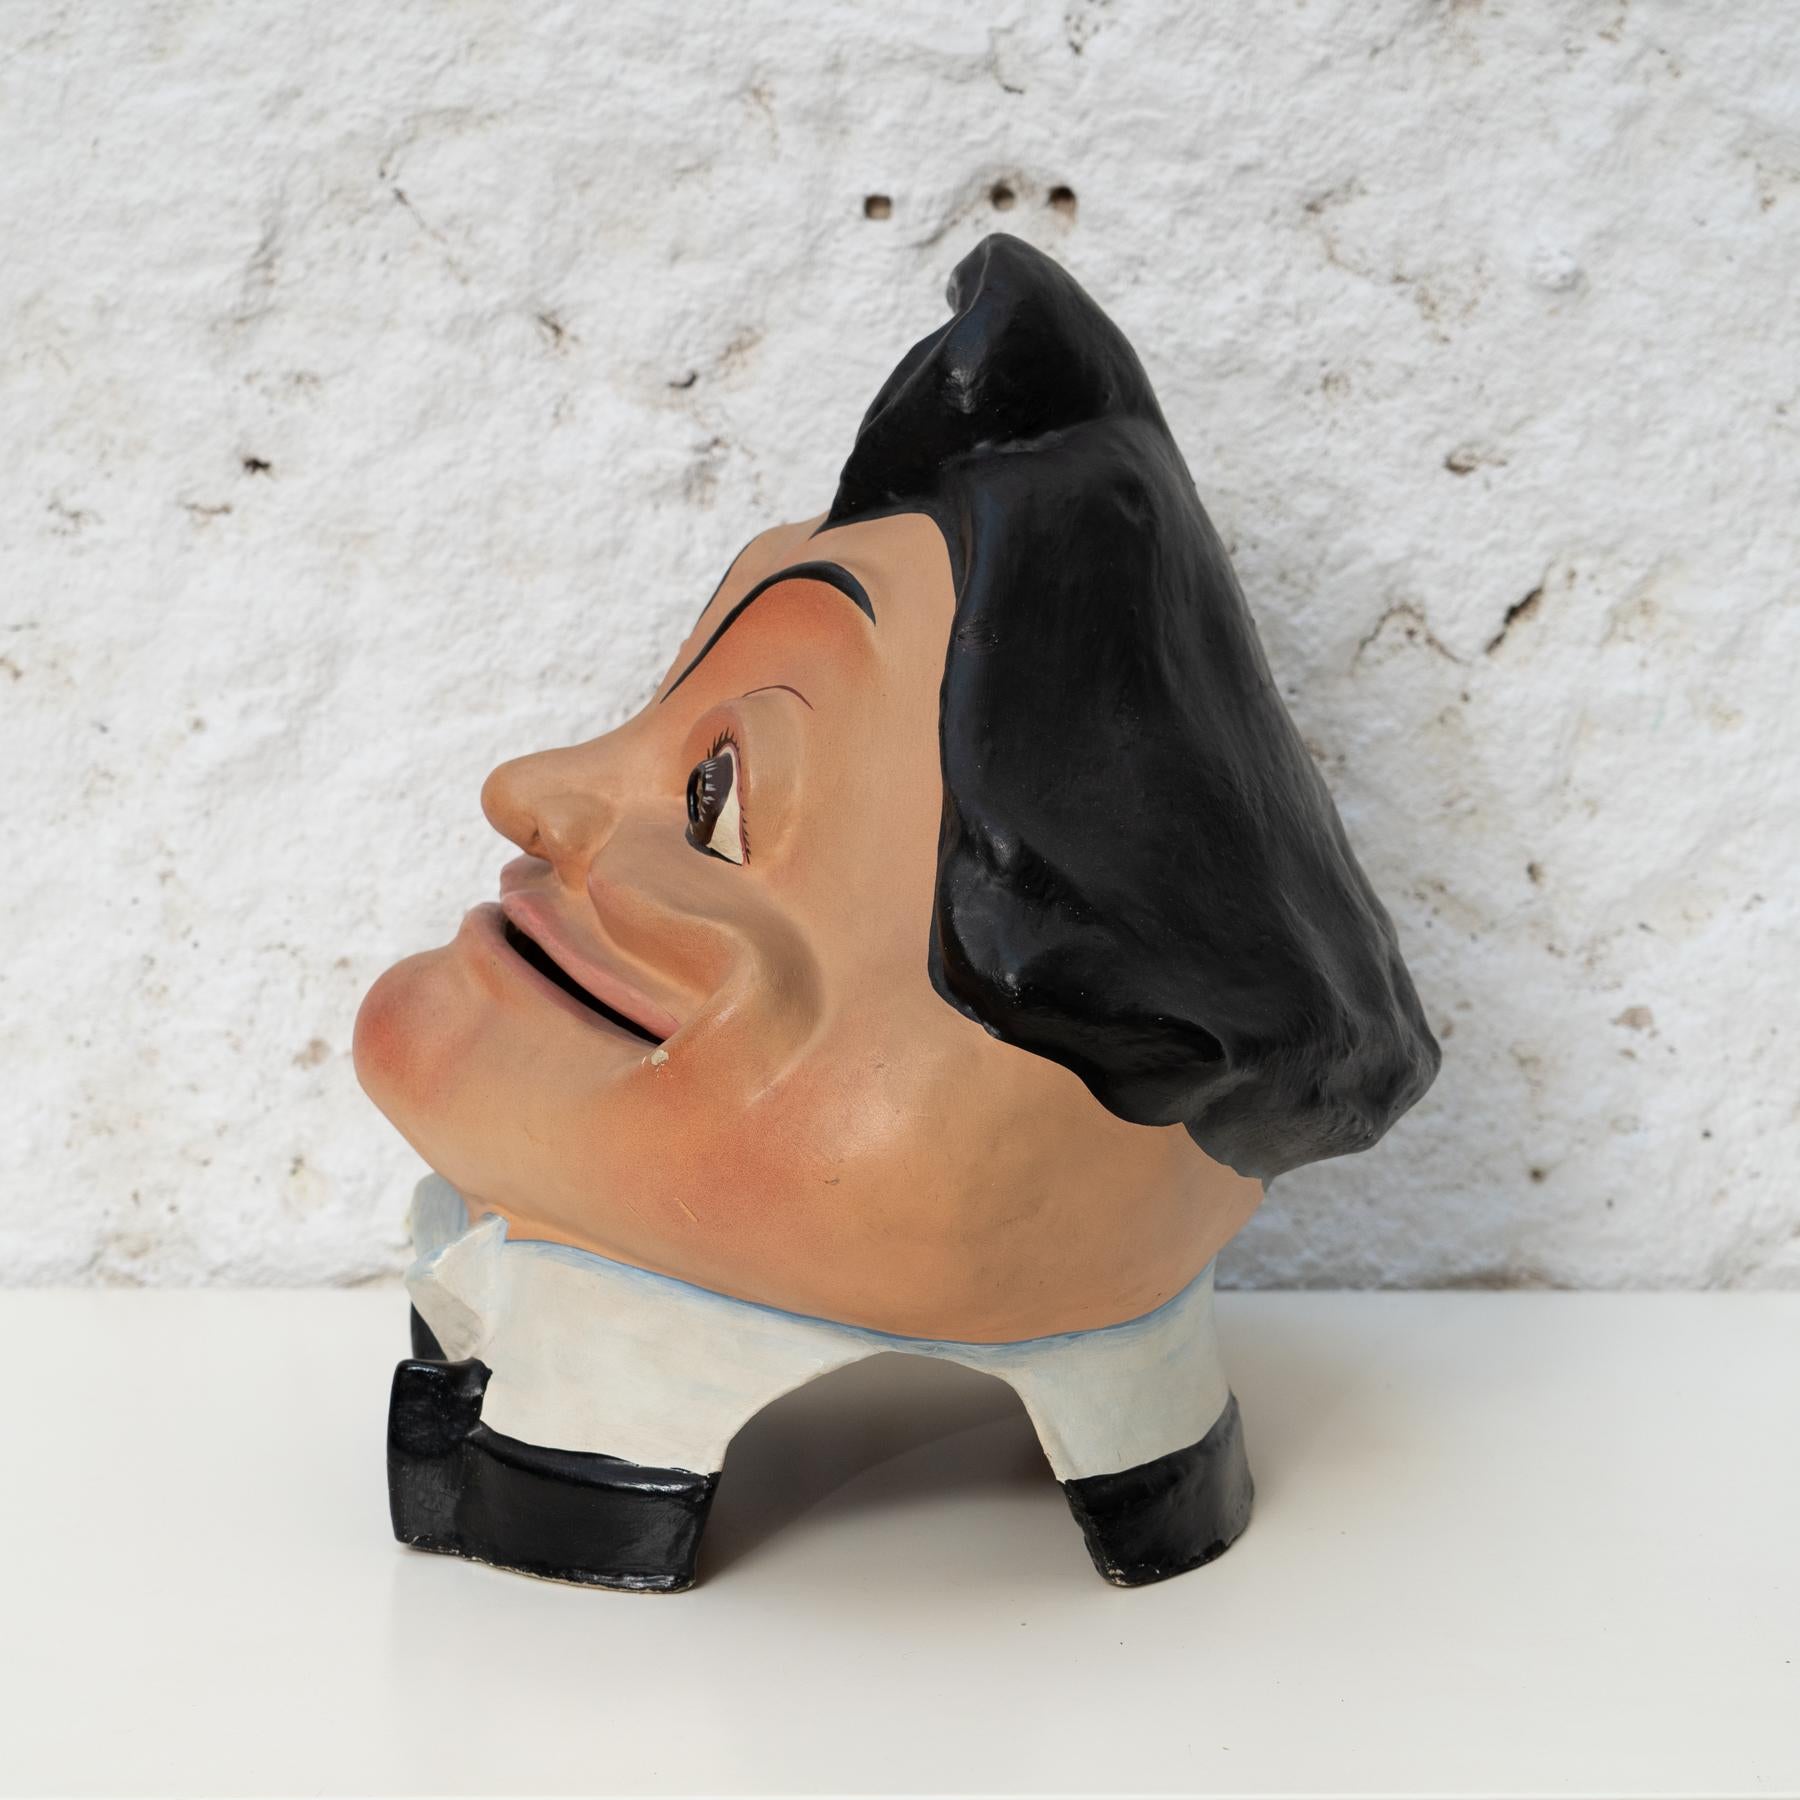 Skurrile Tradition: 'Cap Gros' Pappmaché-Netól-Figur, um 1970 (Ende des 20. Jahrhunderts) im Angebot